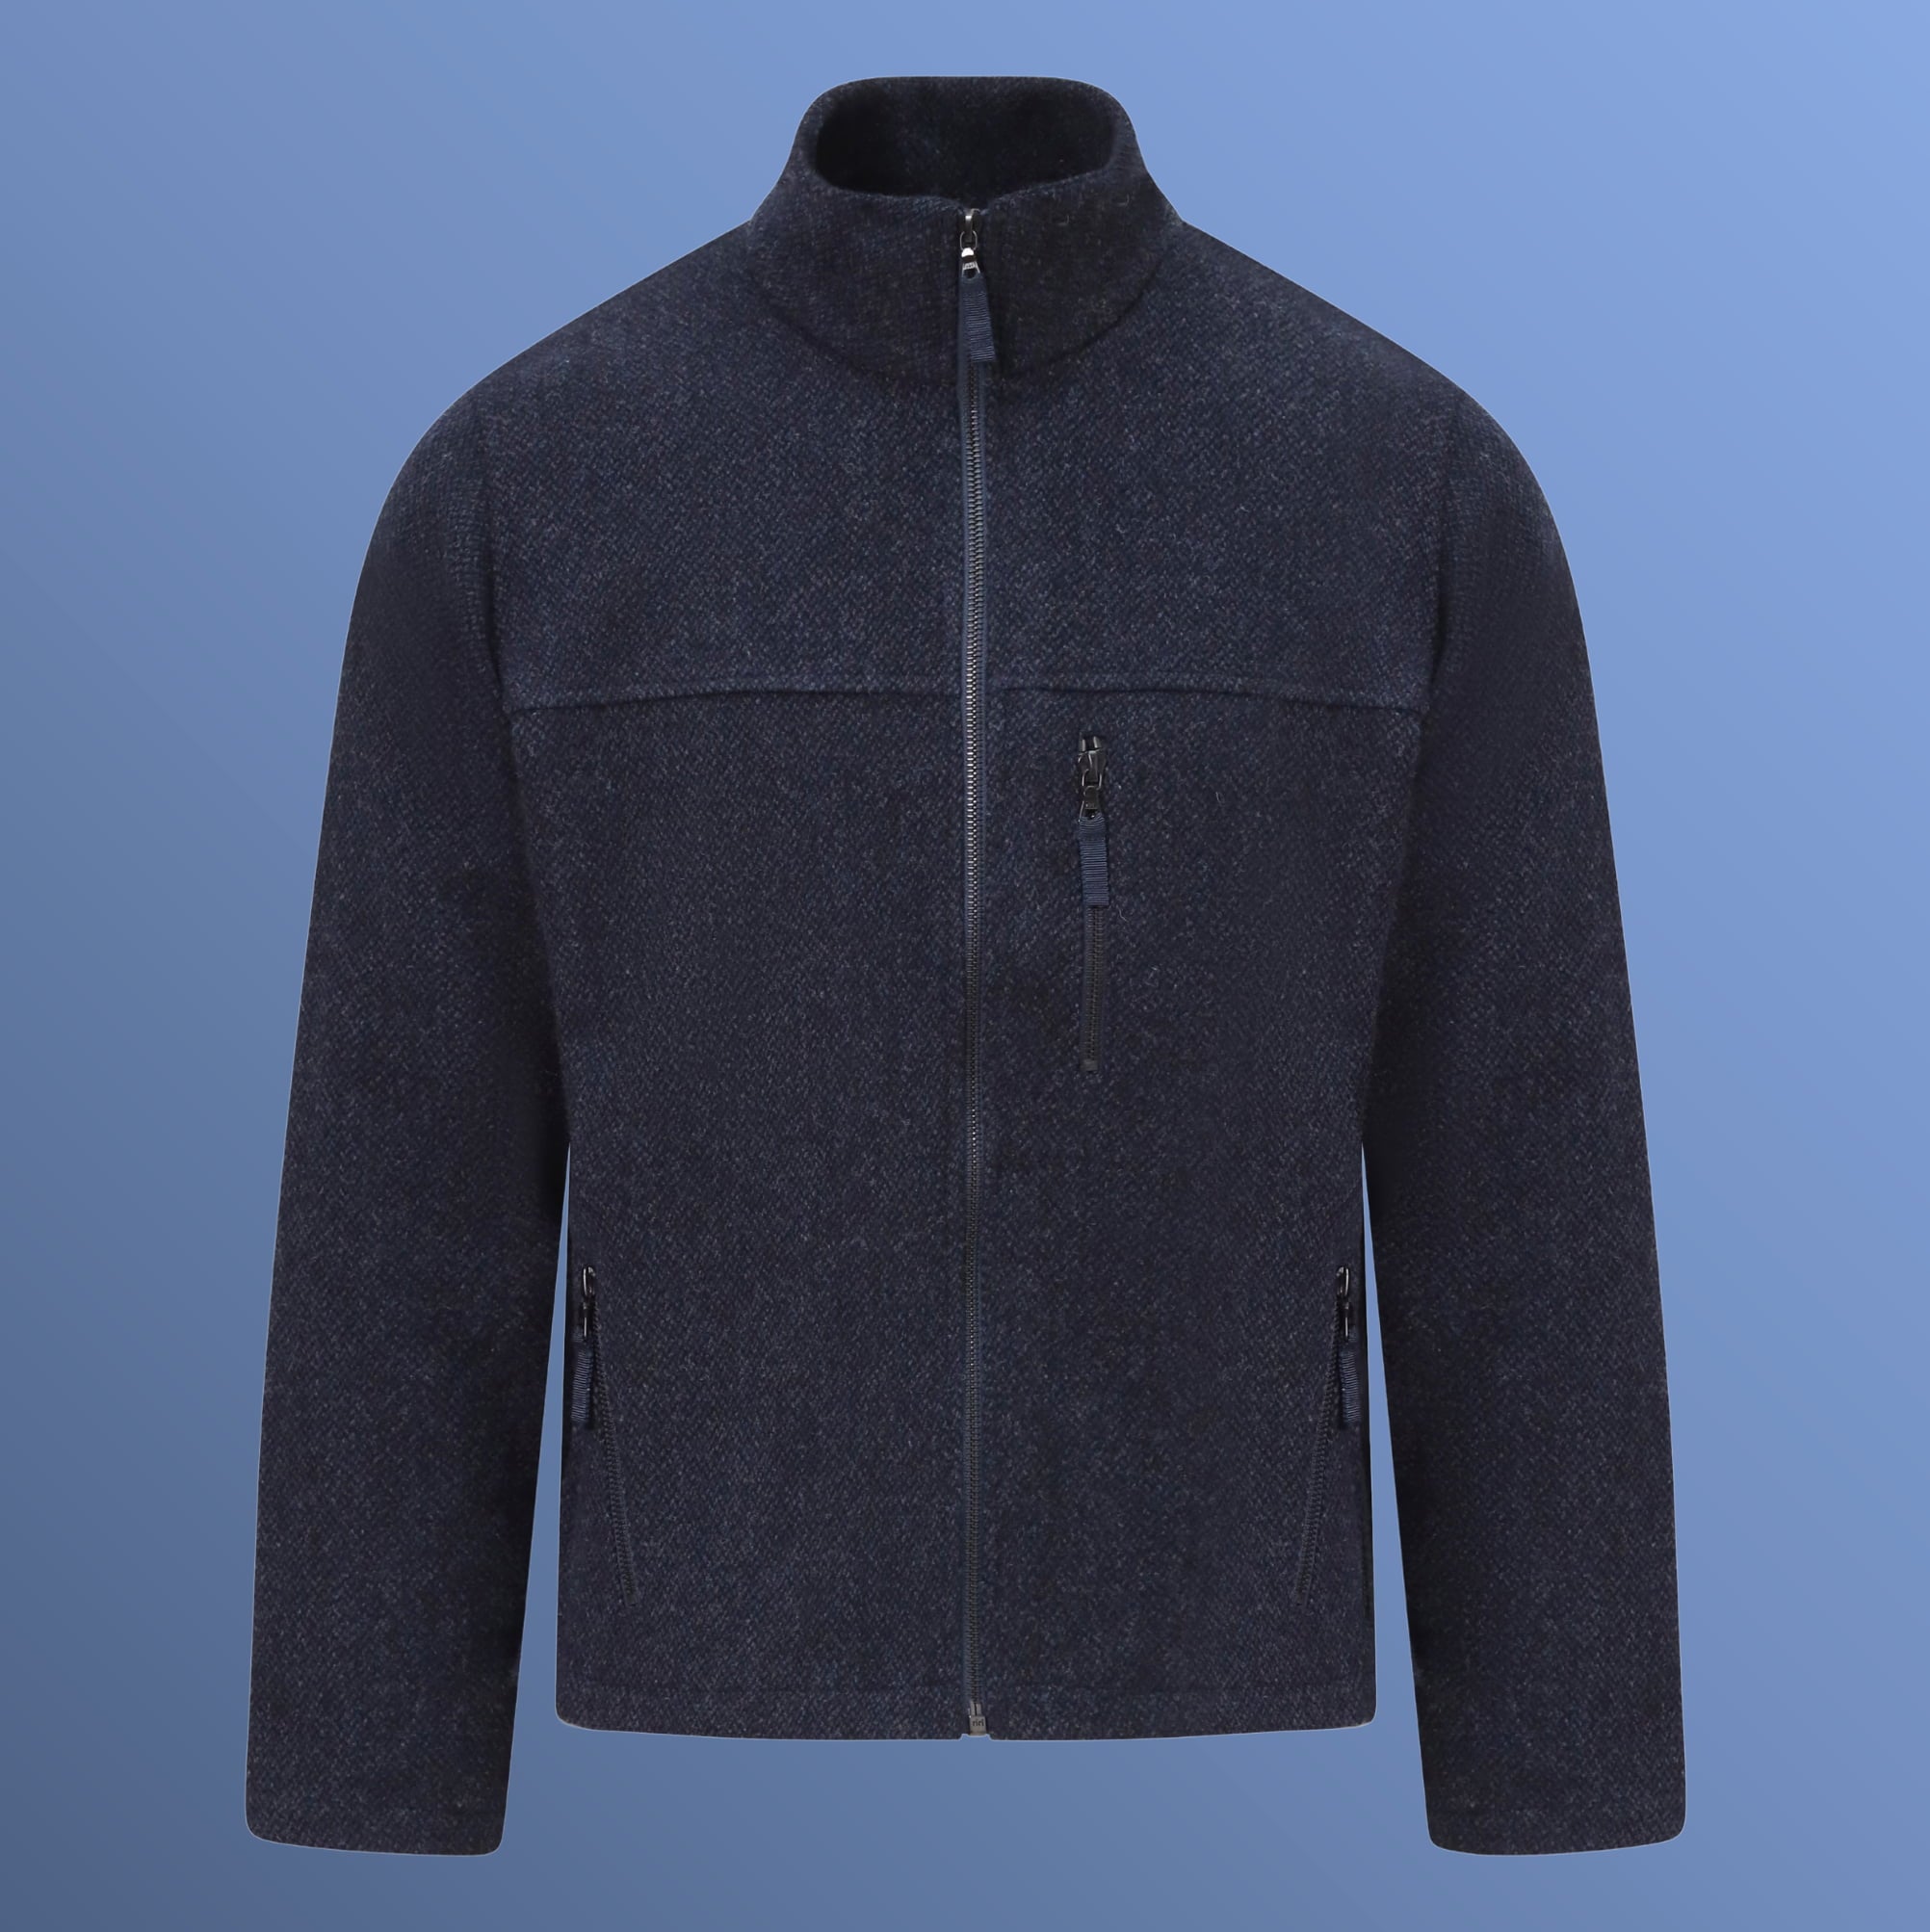 PureFleece Merino Wool Jacket - Men's